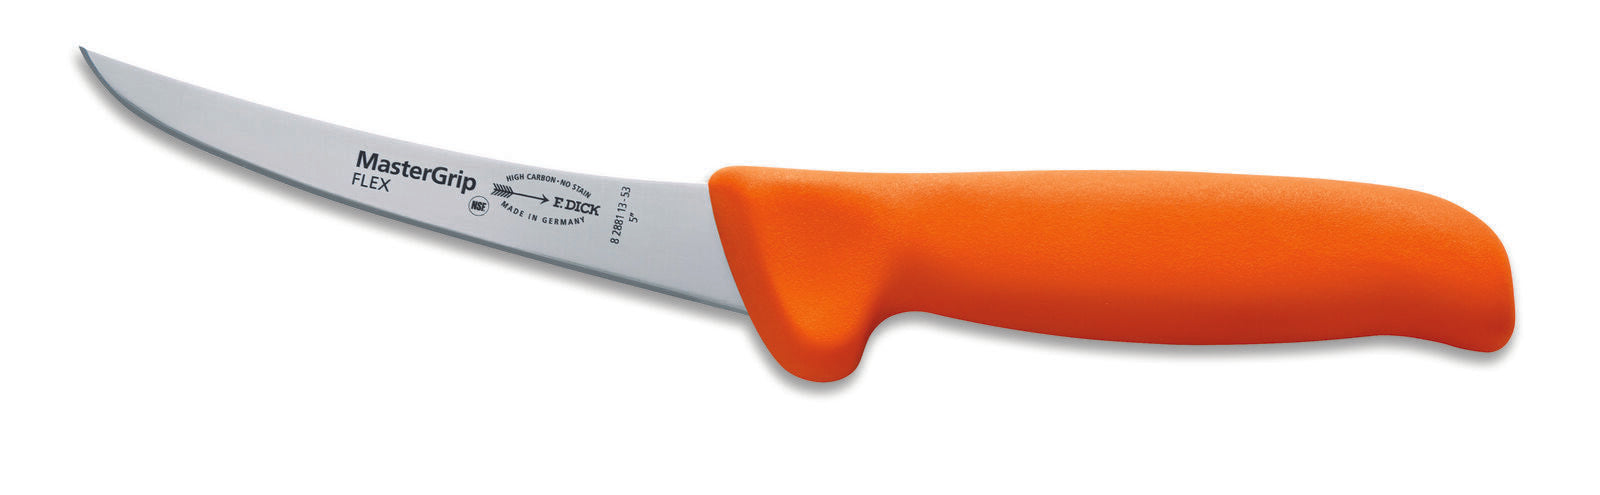 F. Dick (8288113-53) 5" Mastergrip Boning Knife, Curved, Flex, Orange Handle-cityfoodequipment.com